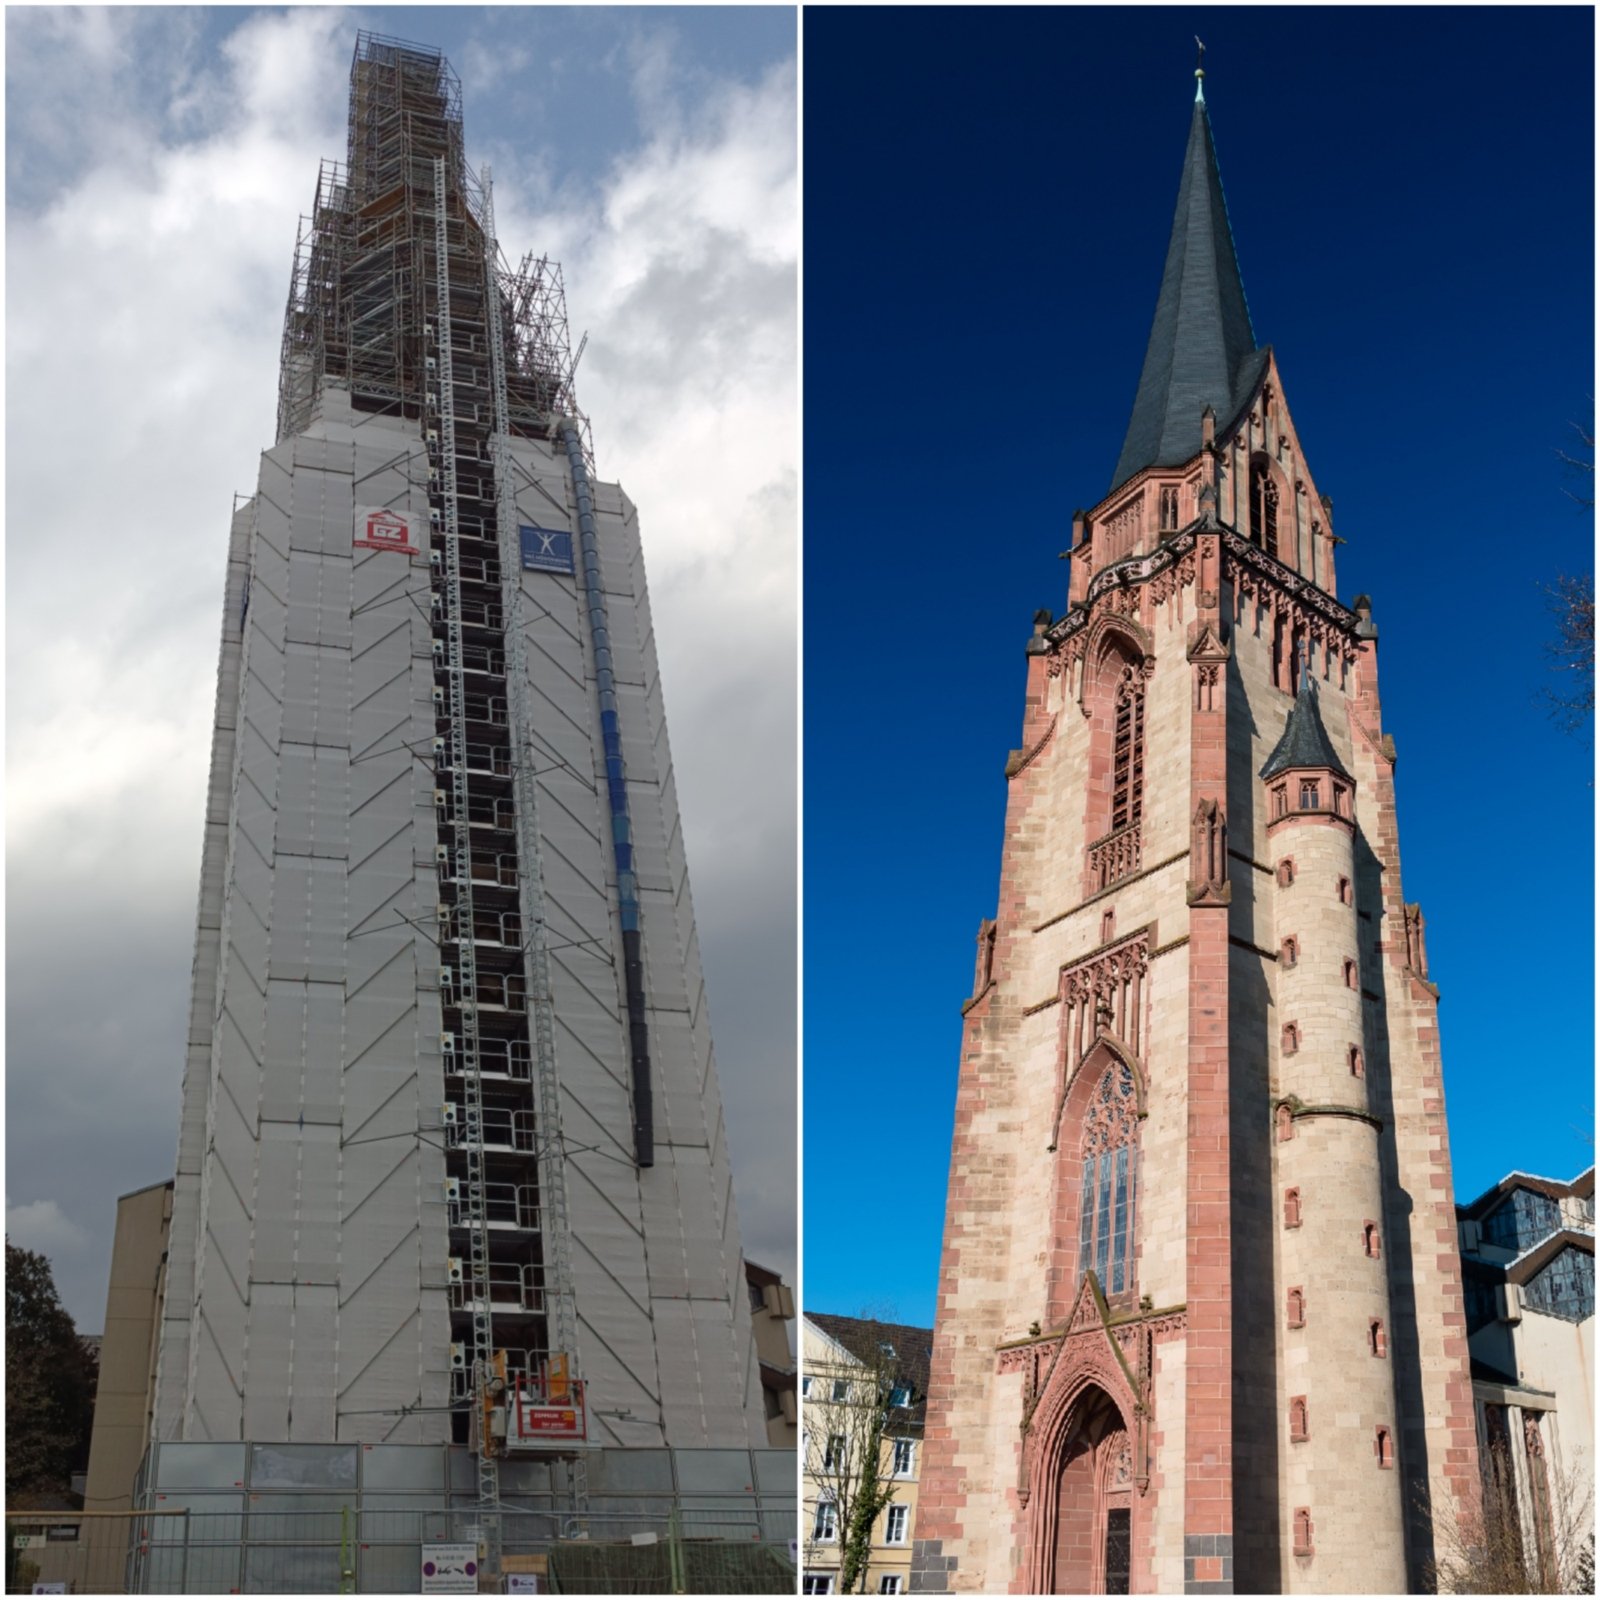 Anno Turm (c) Pöge, Sedlaczek